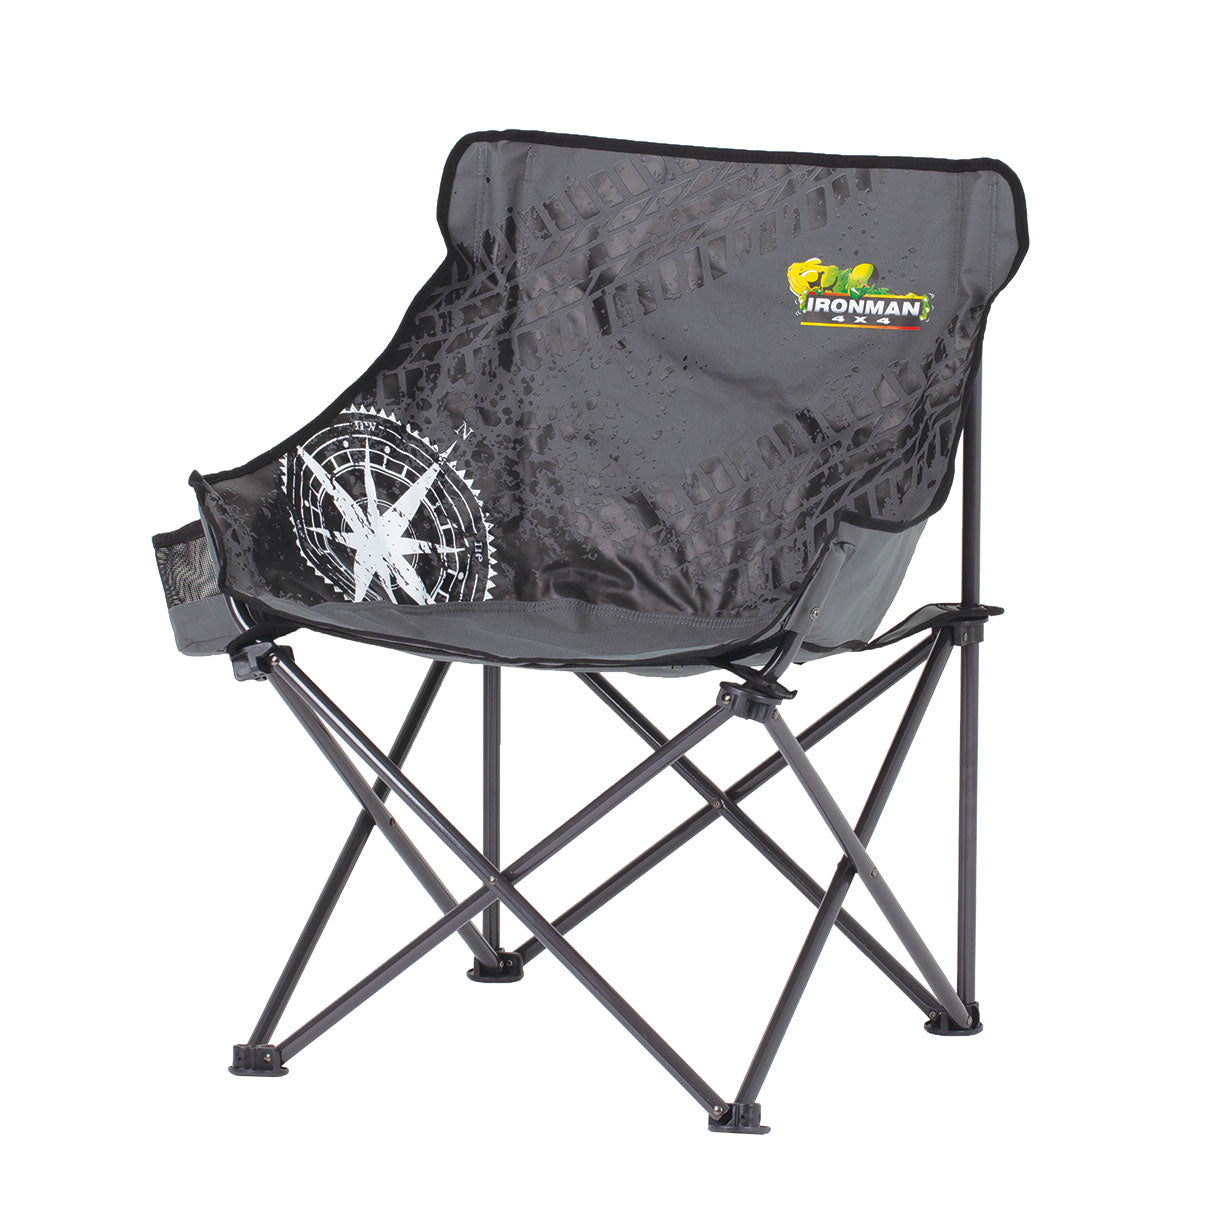 Ironman 4x4 Low Back Quad Fold Camp Chair